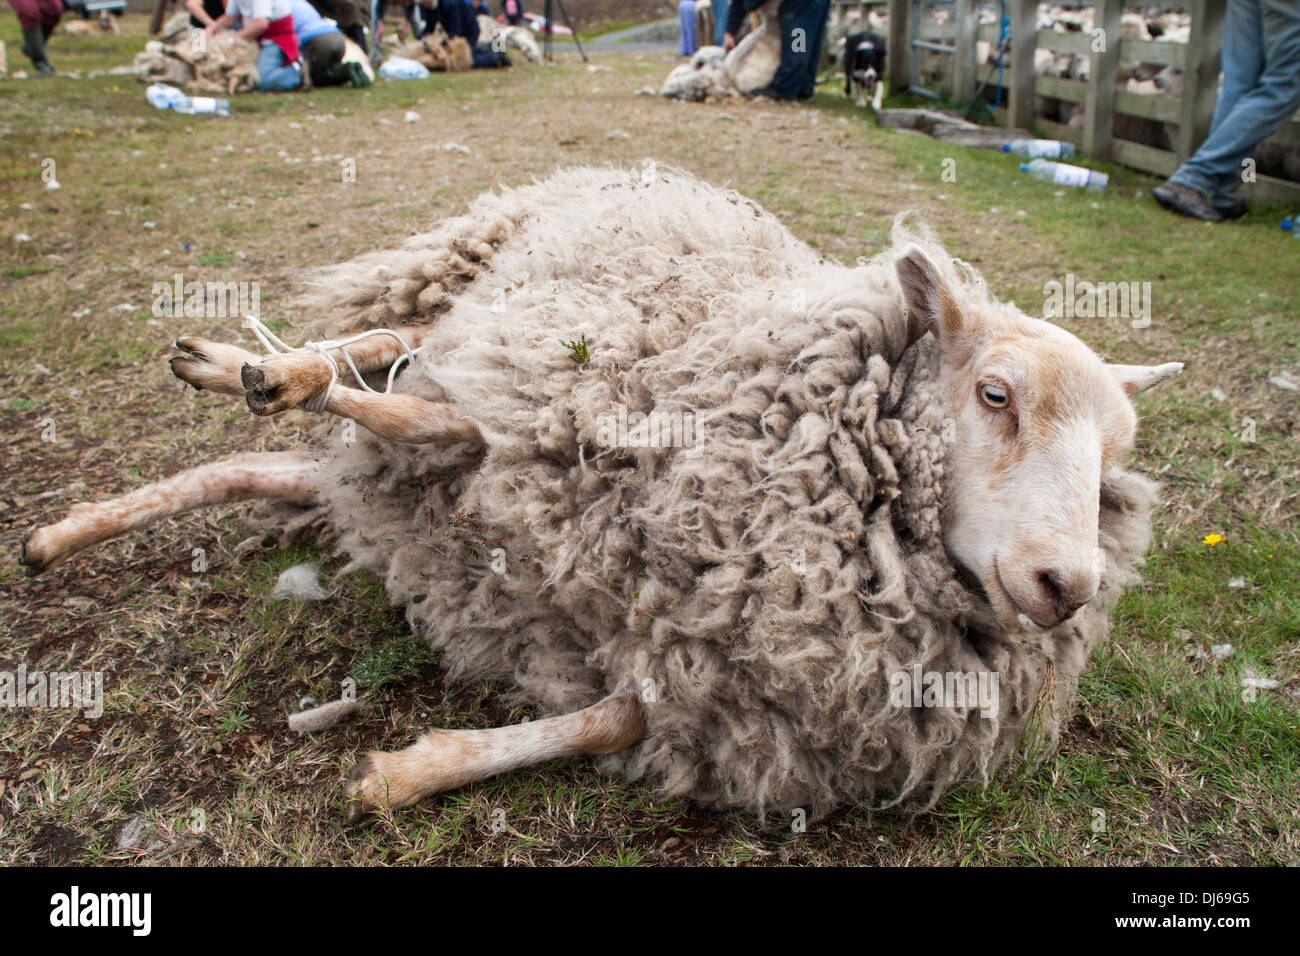 Sheep with legs bound for shearing, Fair Isle, Shetland, UK Stock Photo